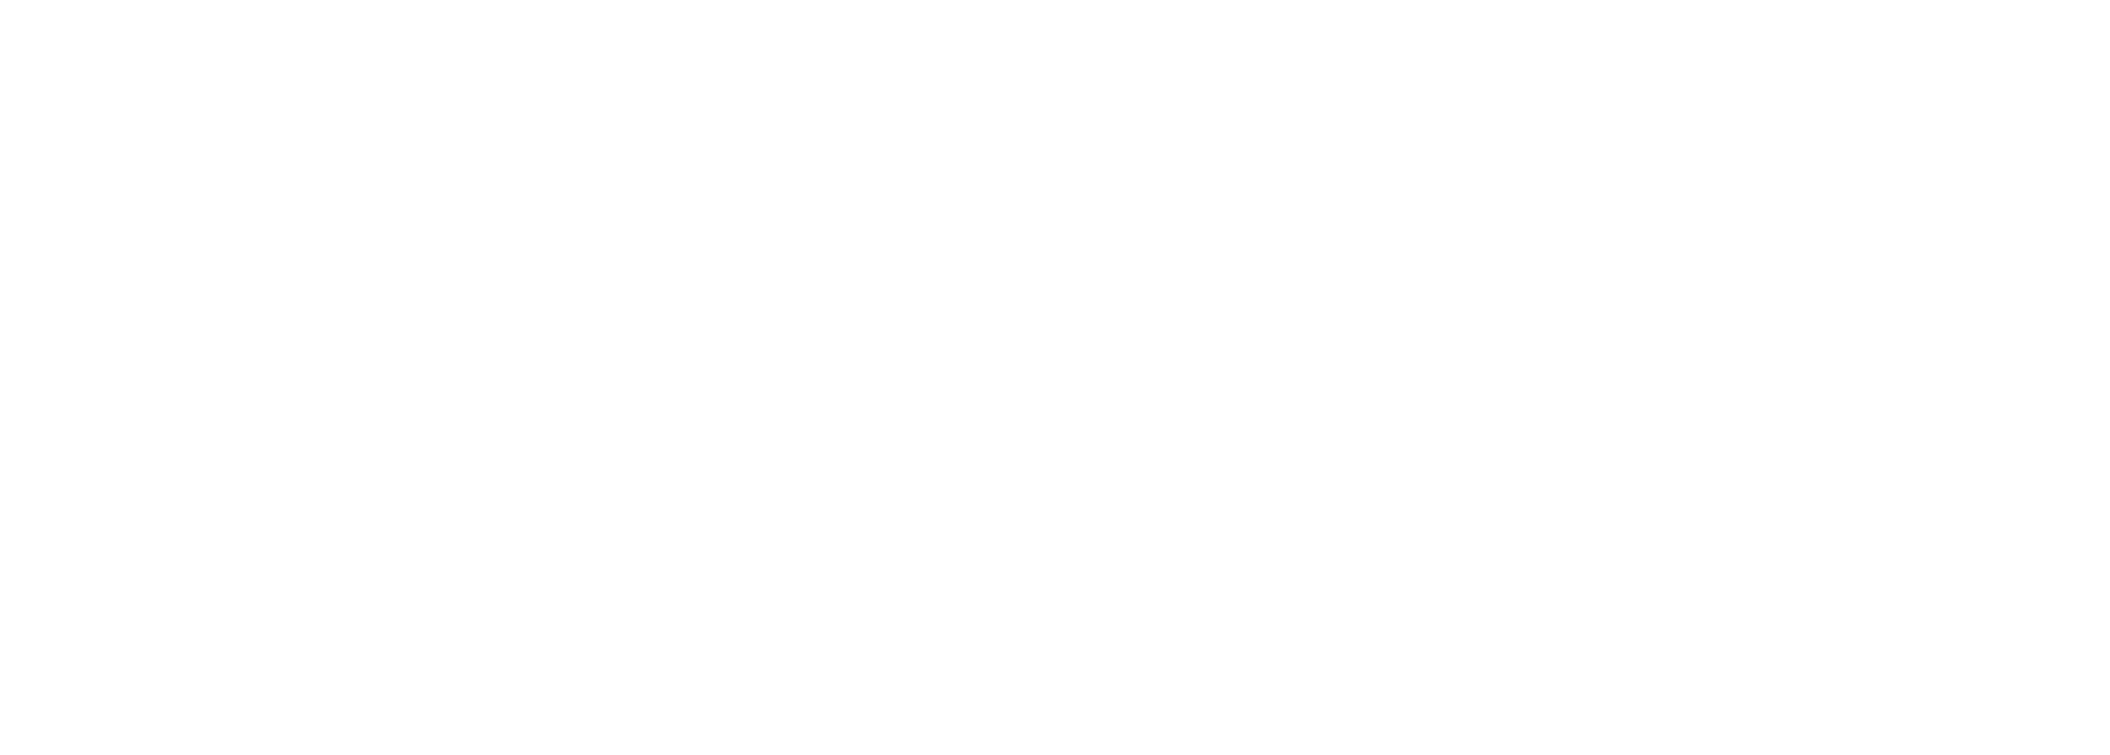 Main Street Financial Life Advisors, LLC®